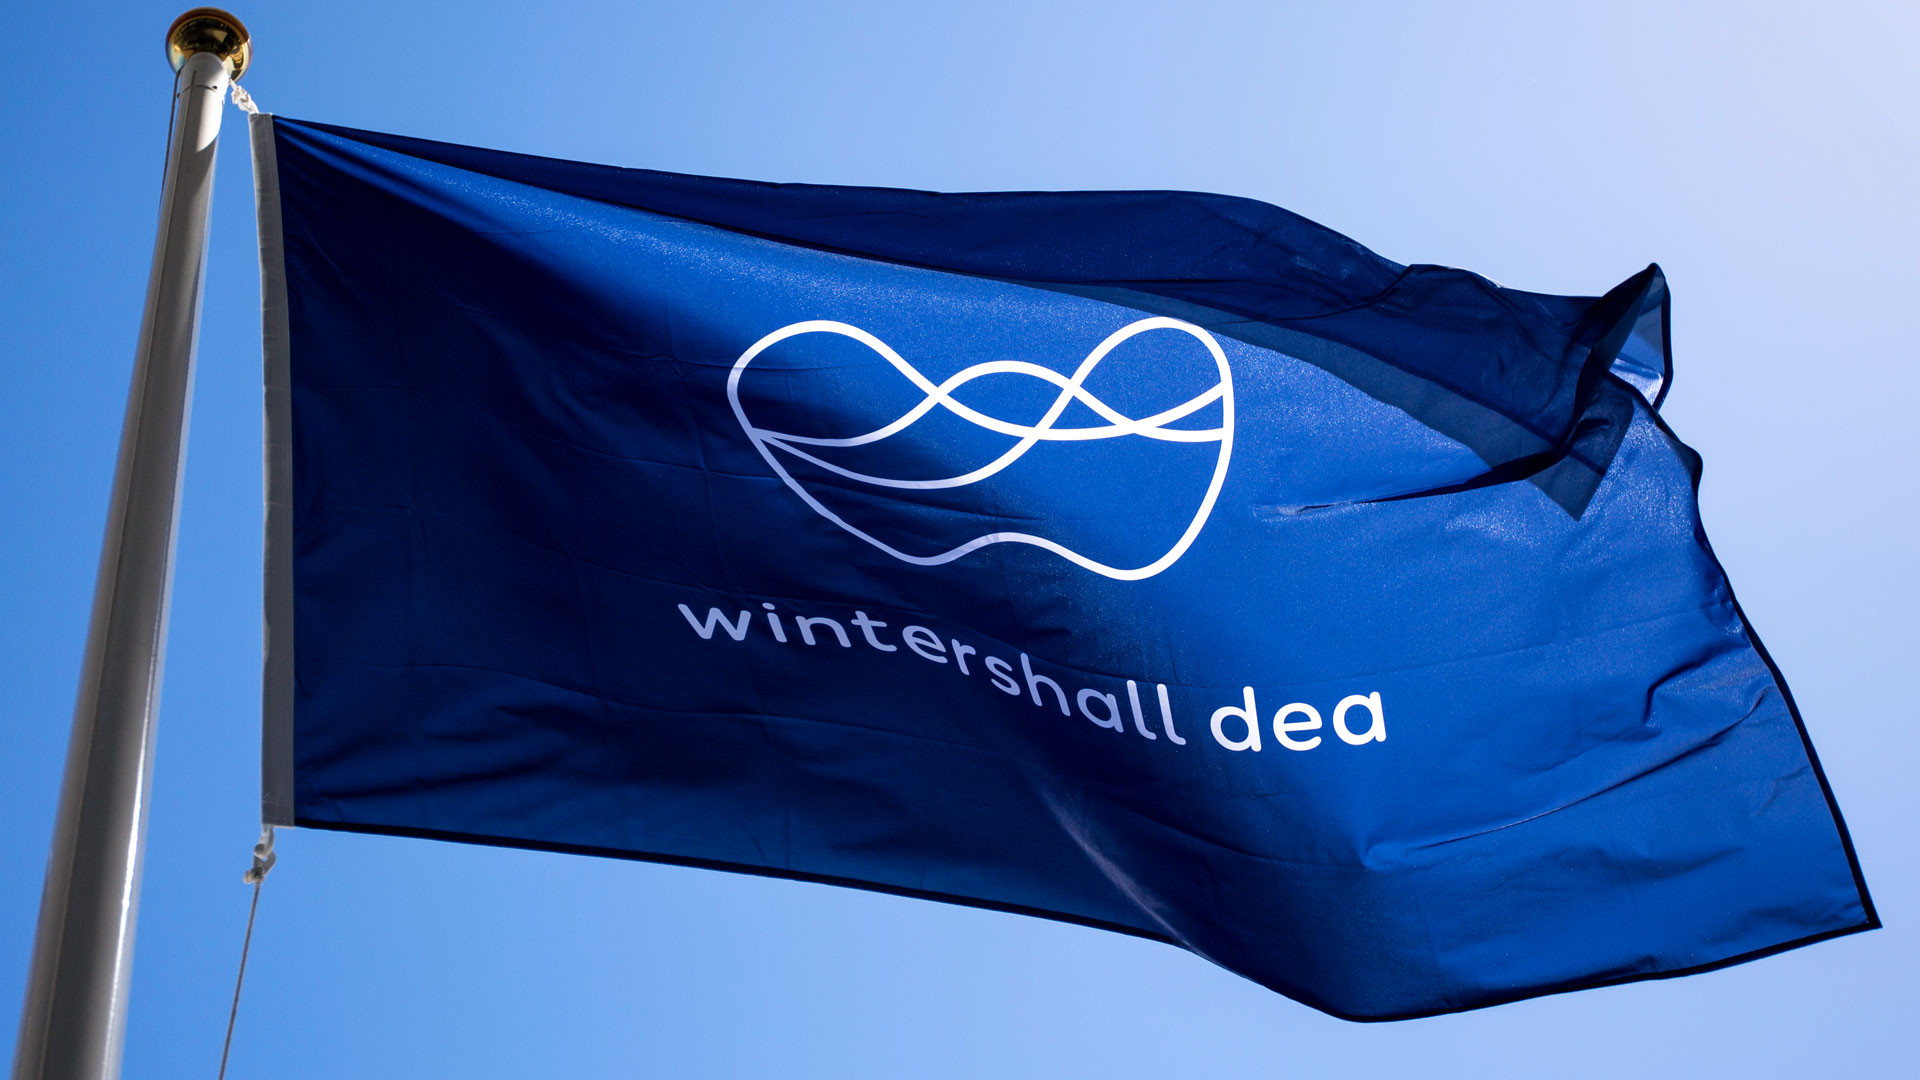 Wintershall Dea – Flag, Quelle: Wintershall Dea